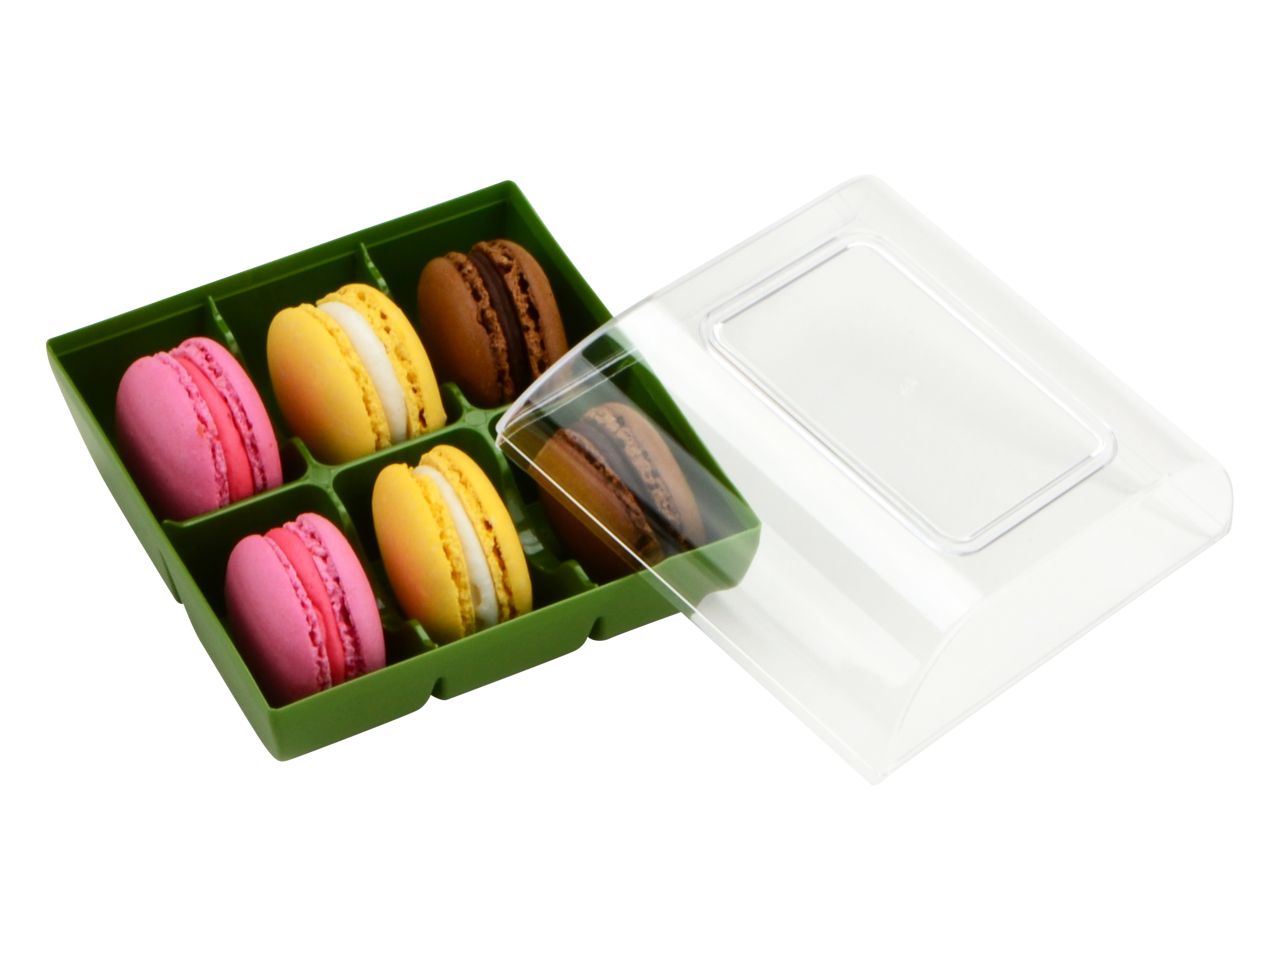 Macarons-Verpackung: Grün, Kunststoff, Olive & transparent, für 6 Macarons, 9,9 x 9,4 x 5,3 cm